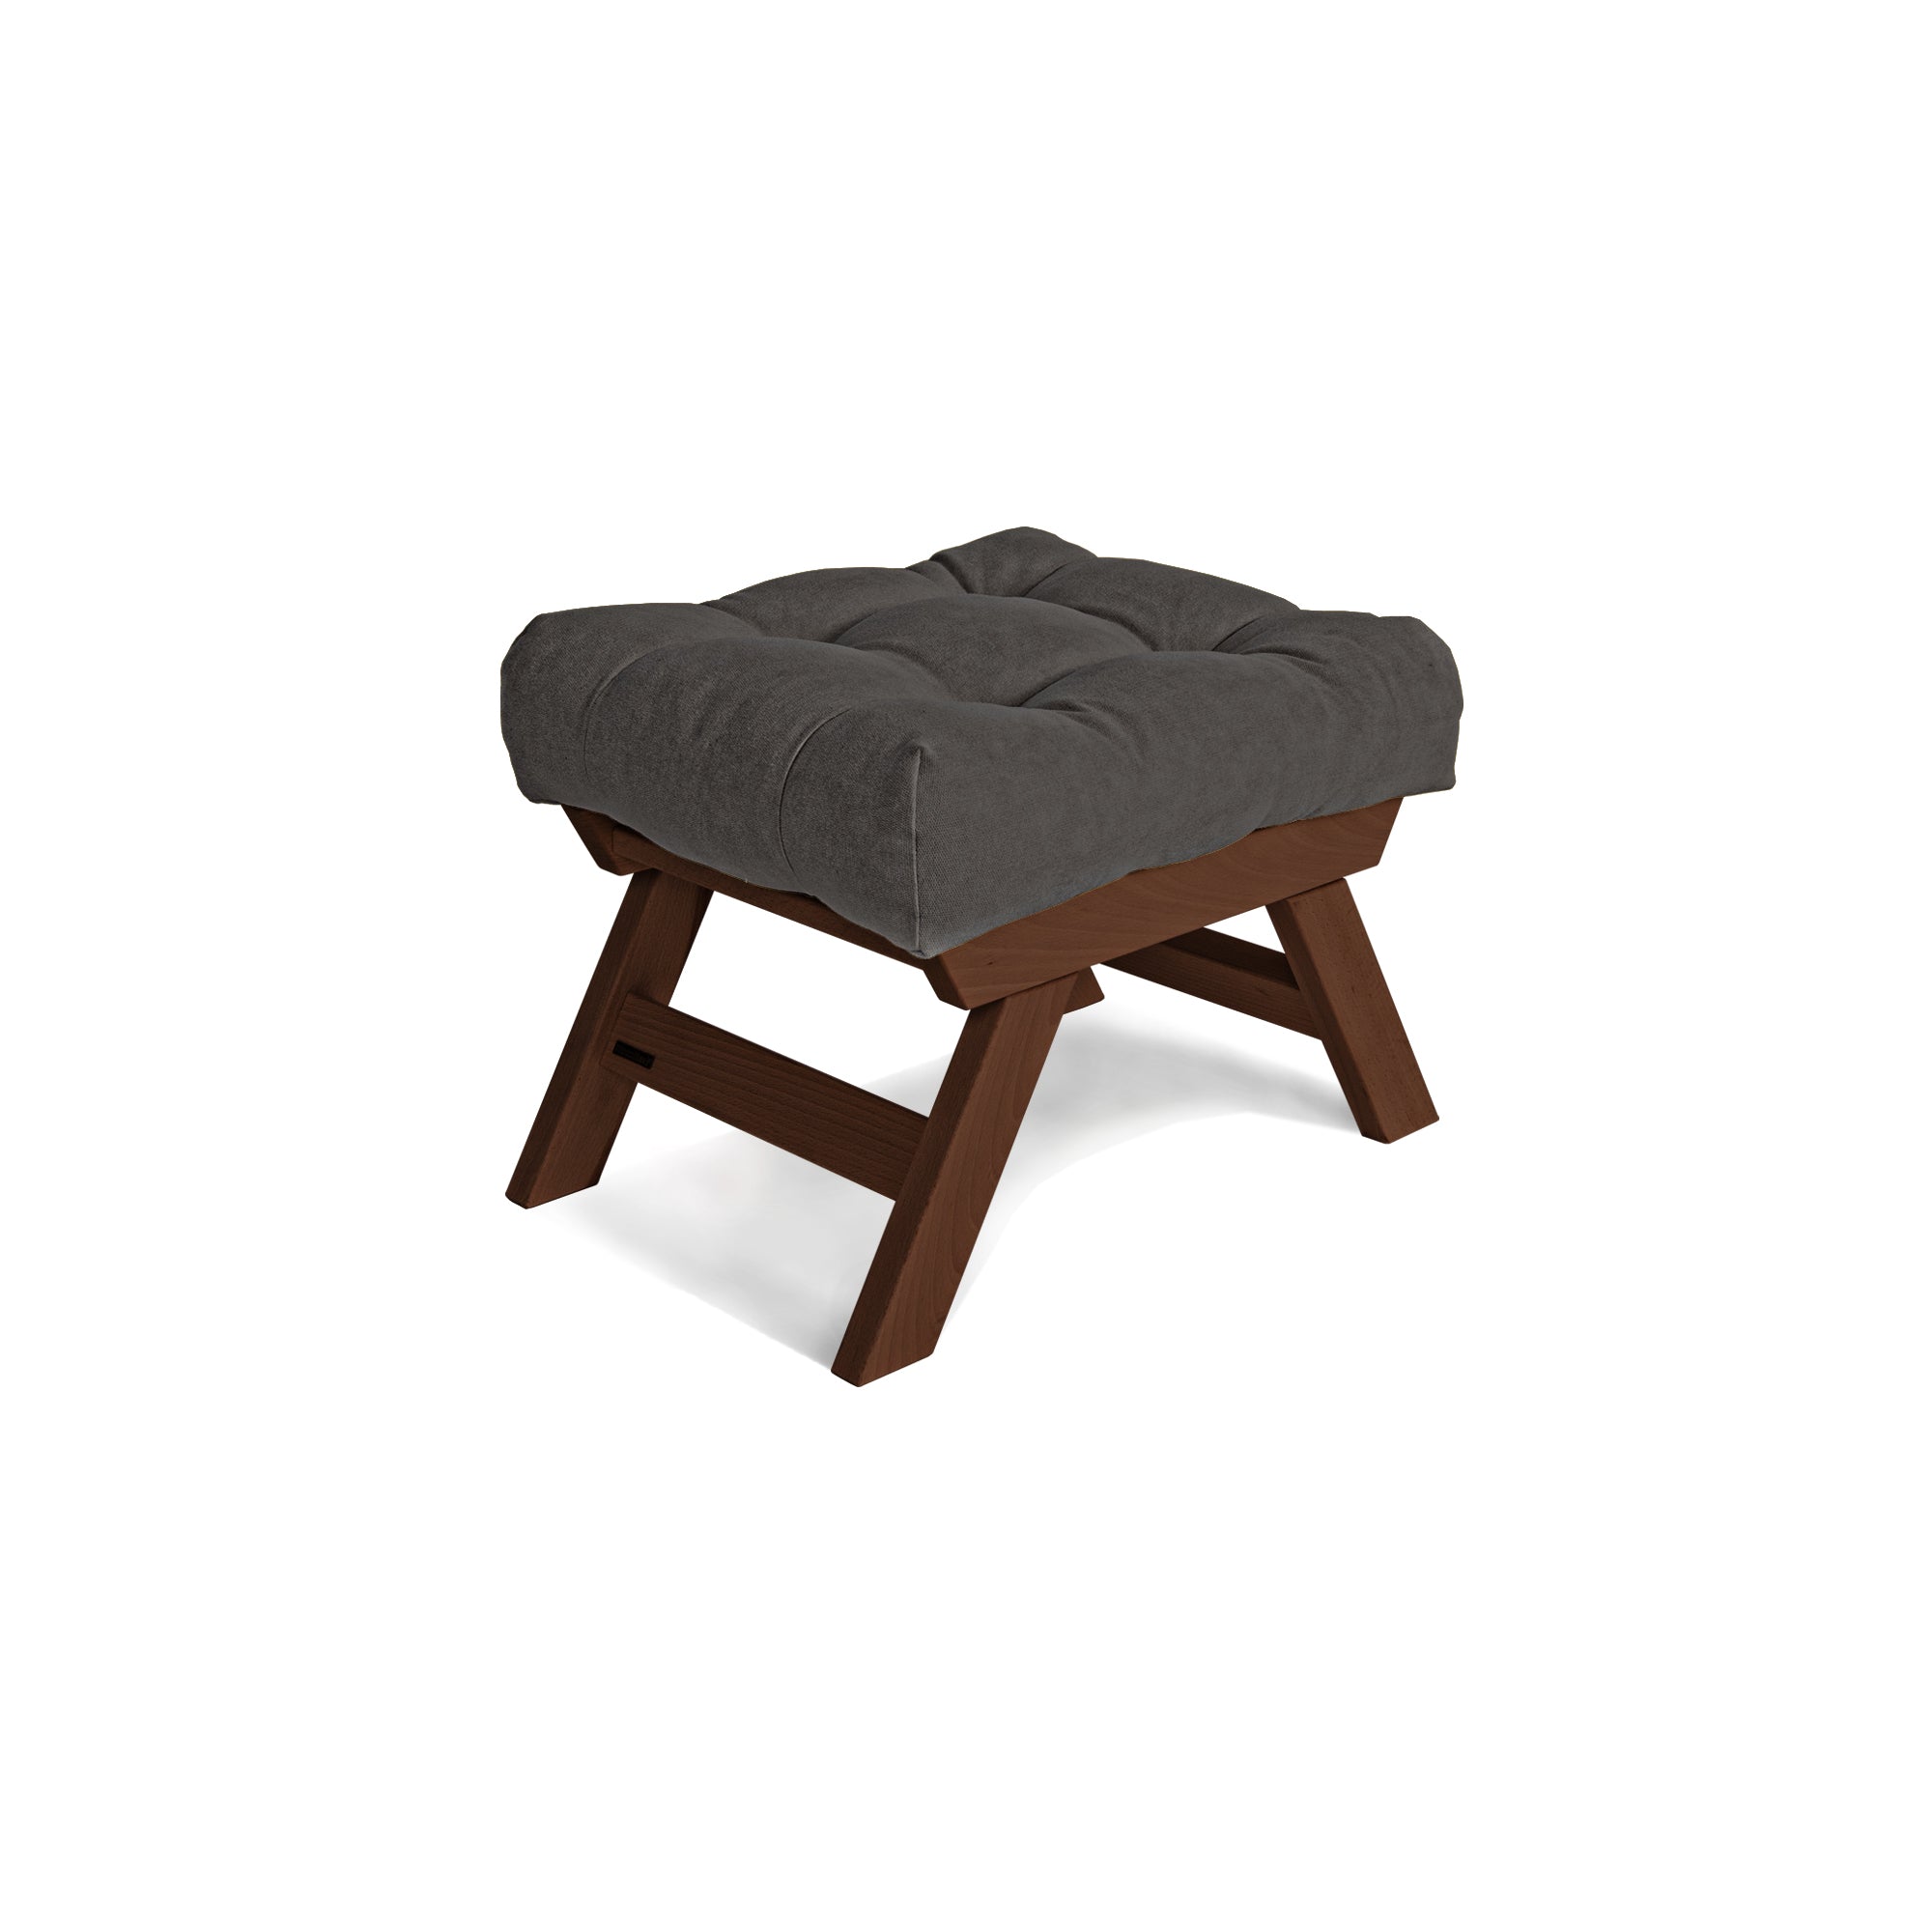 ALLEGRO Pouffe, Walnut Wood upholstery colour gray